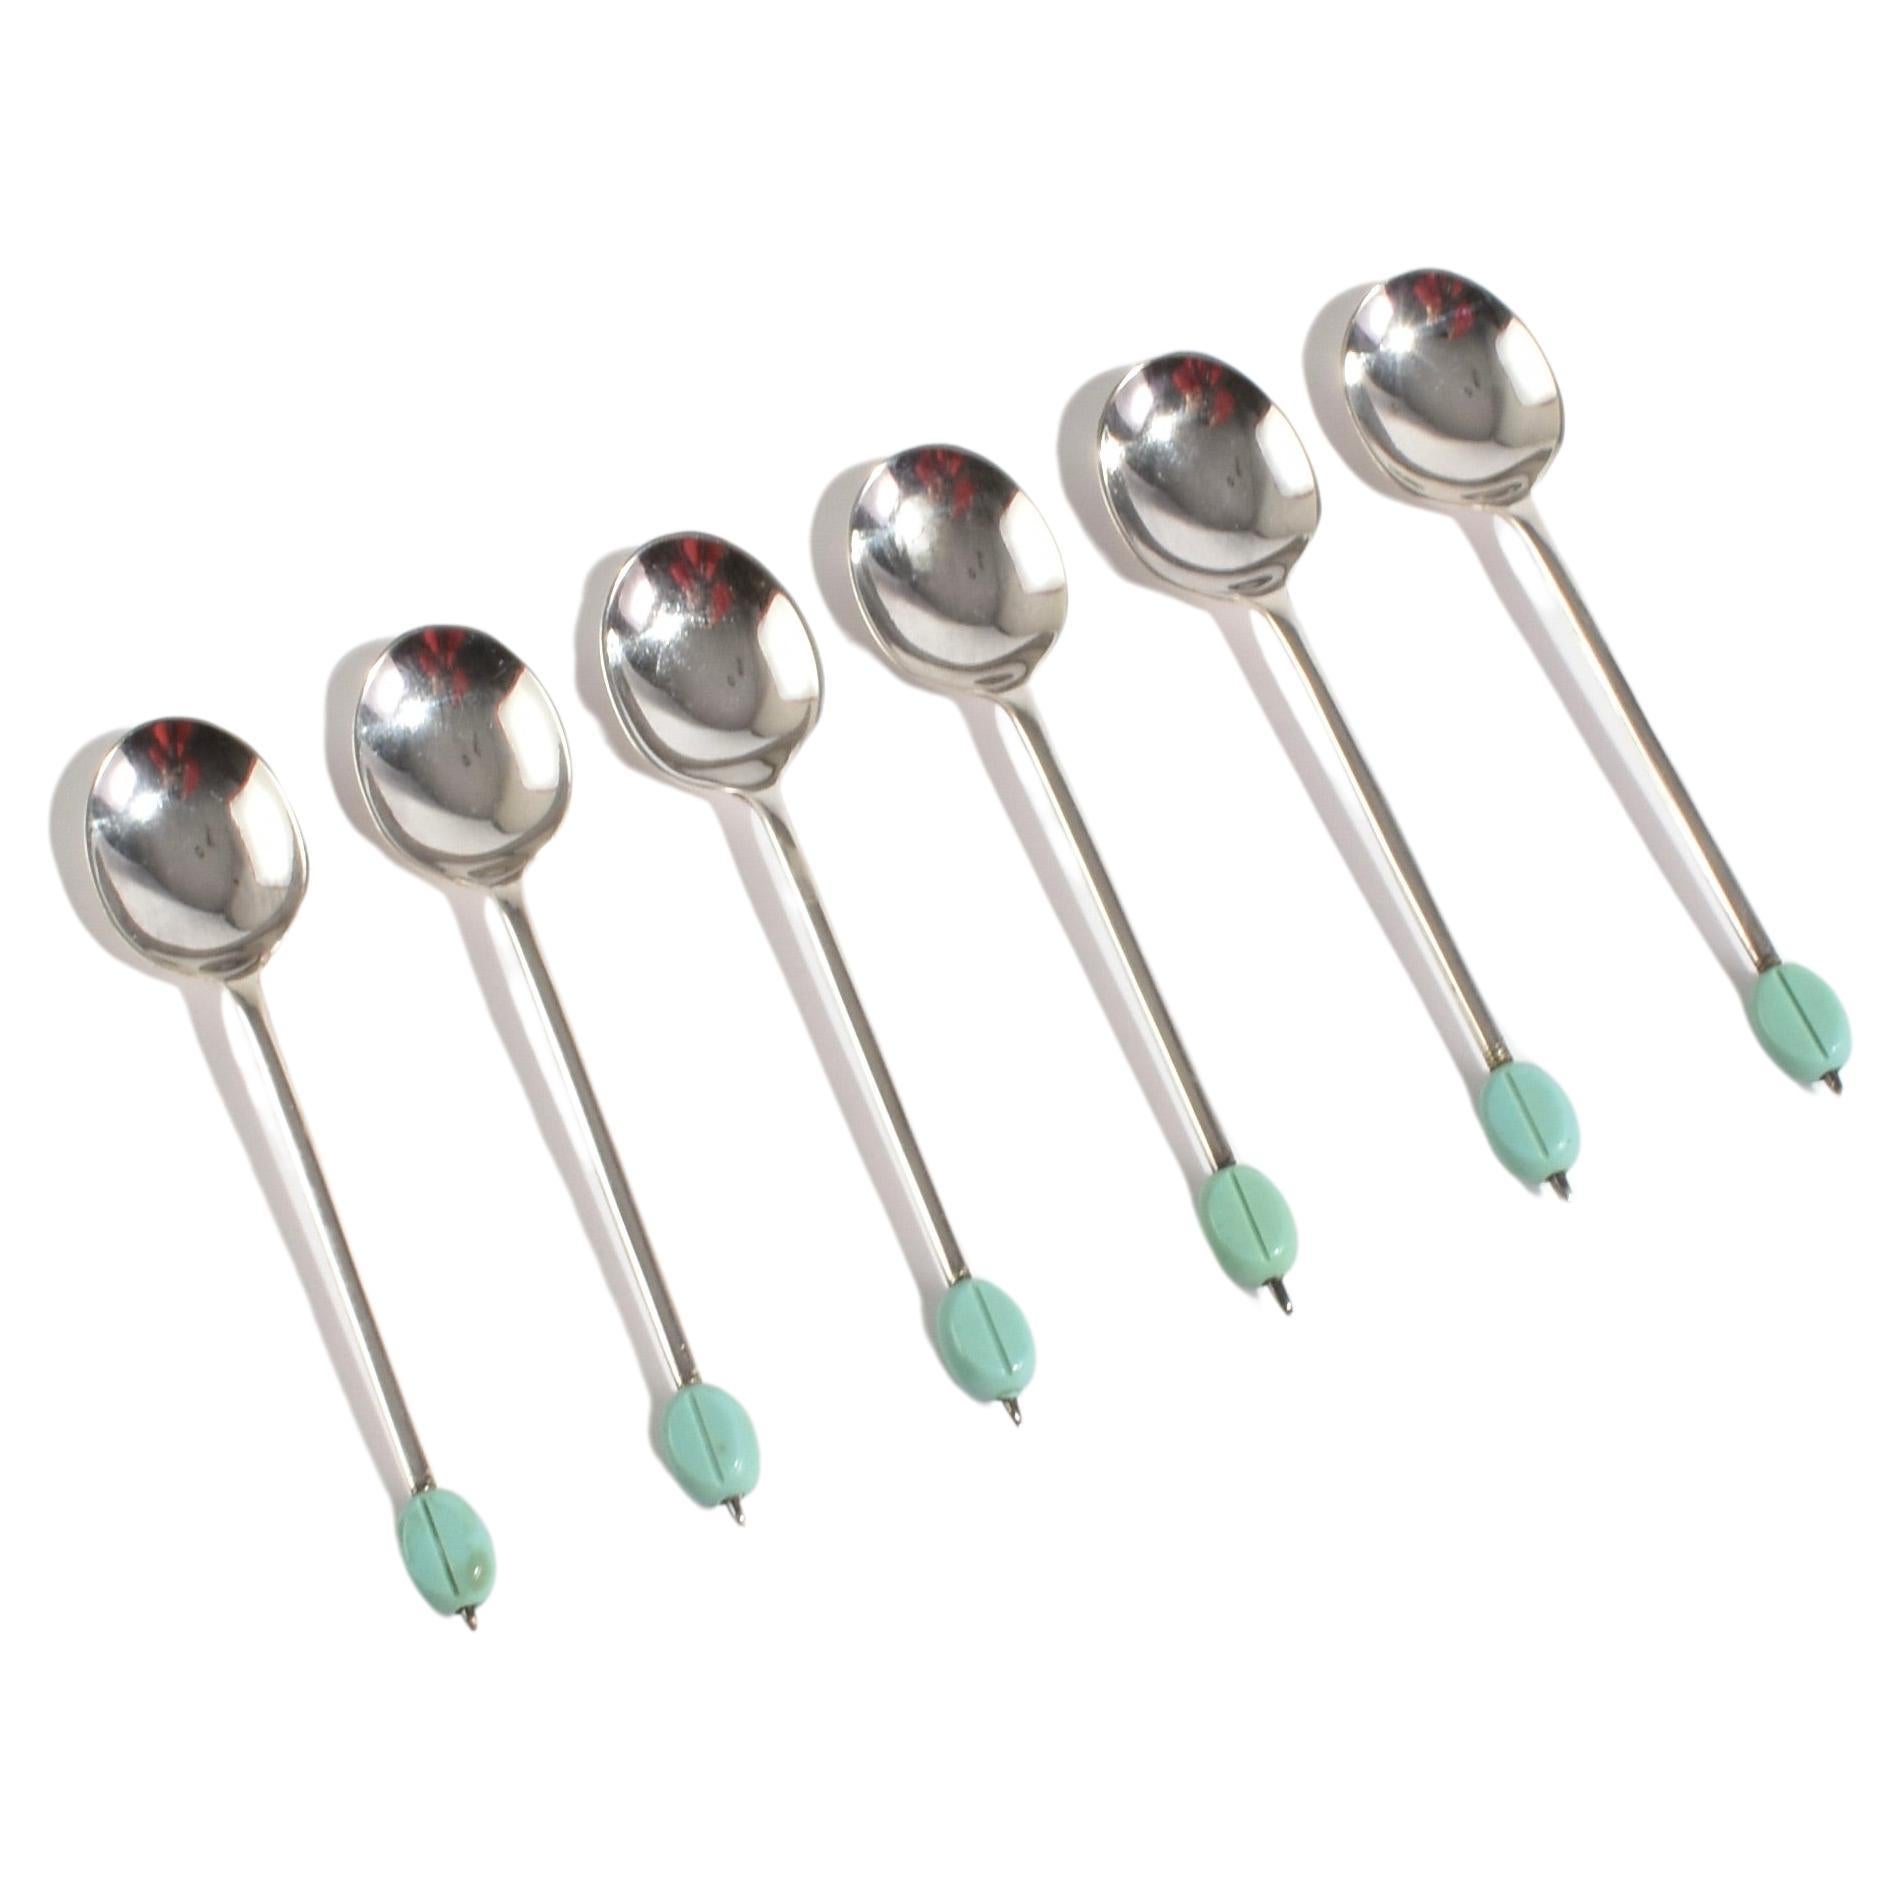 Demitasse Spoon Set For Sale